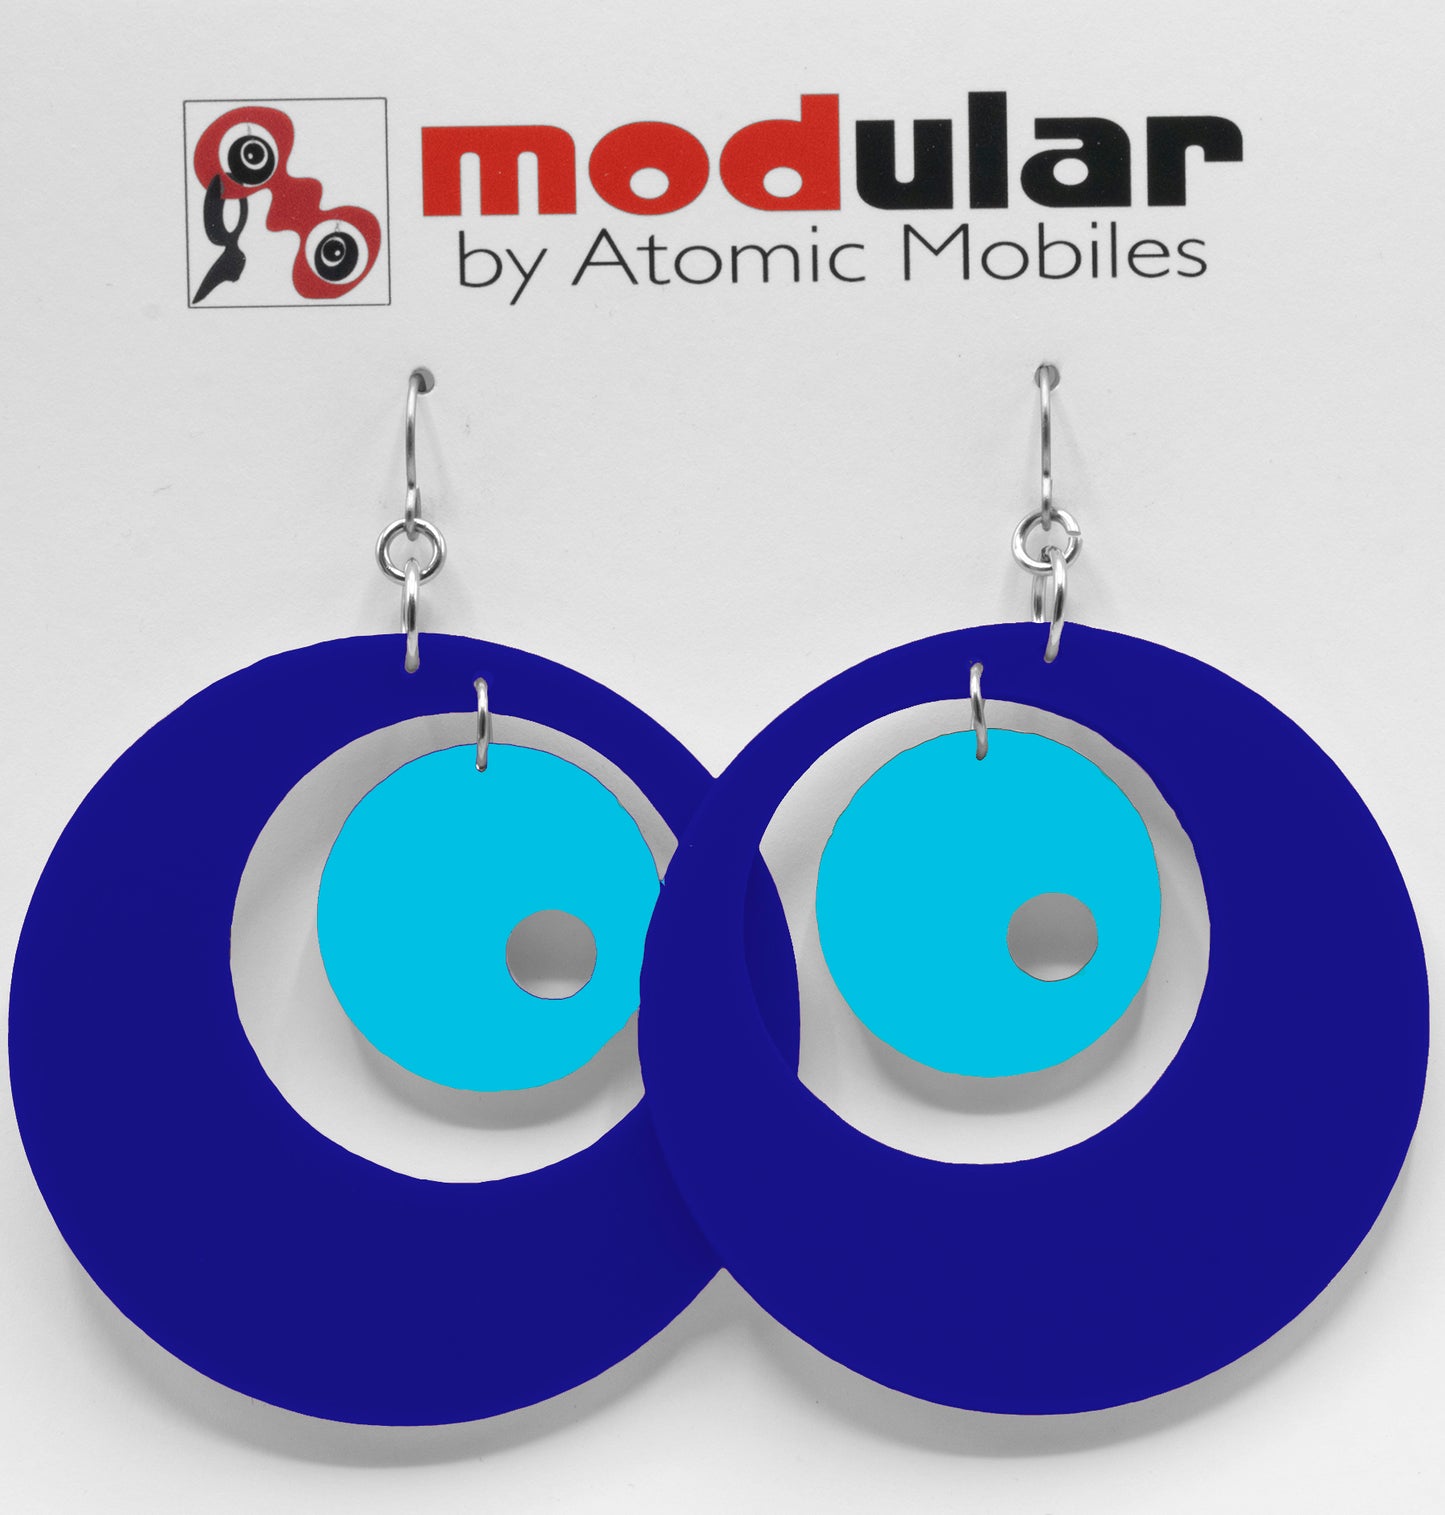 MODular Earrings - Groovy Statement Earrings in Navy Blue by AtomicMobiles.com - retro era inspired mod handmade jewelry